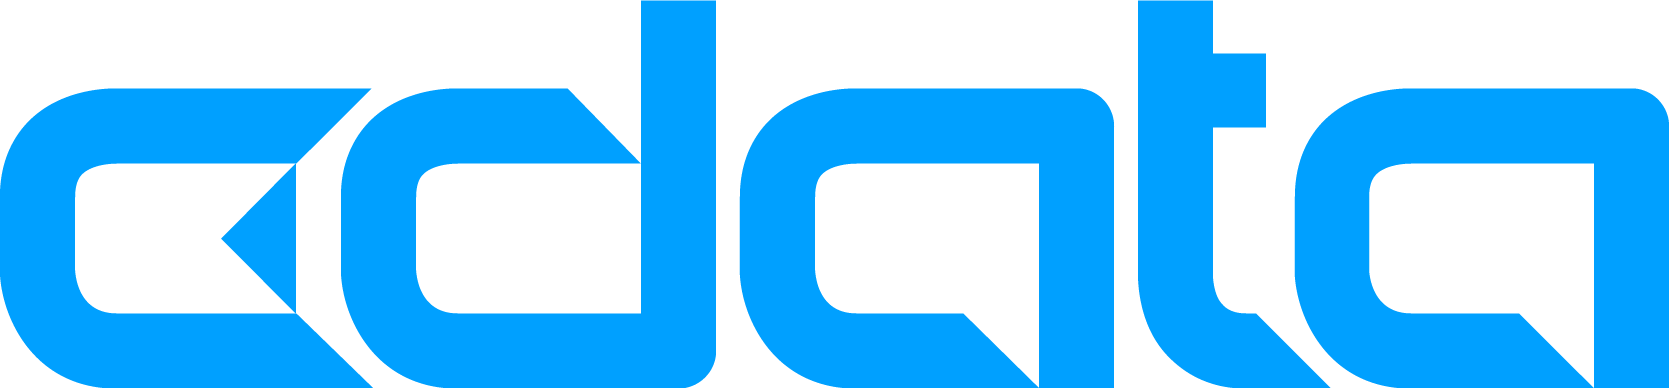 CData Drivers and Connectors Logo